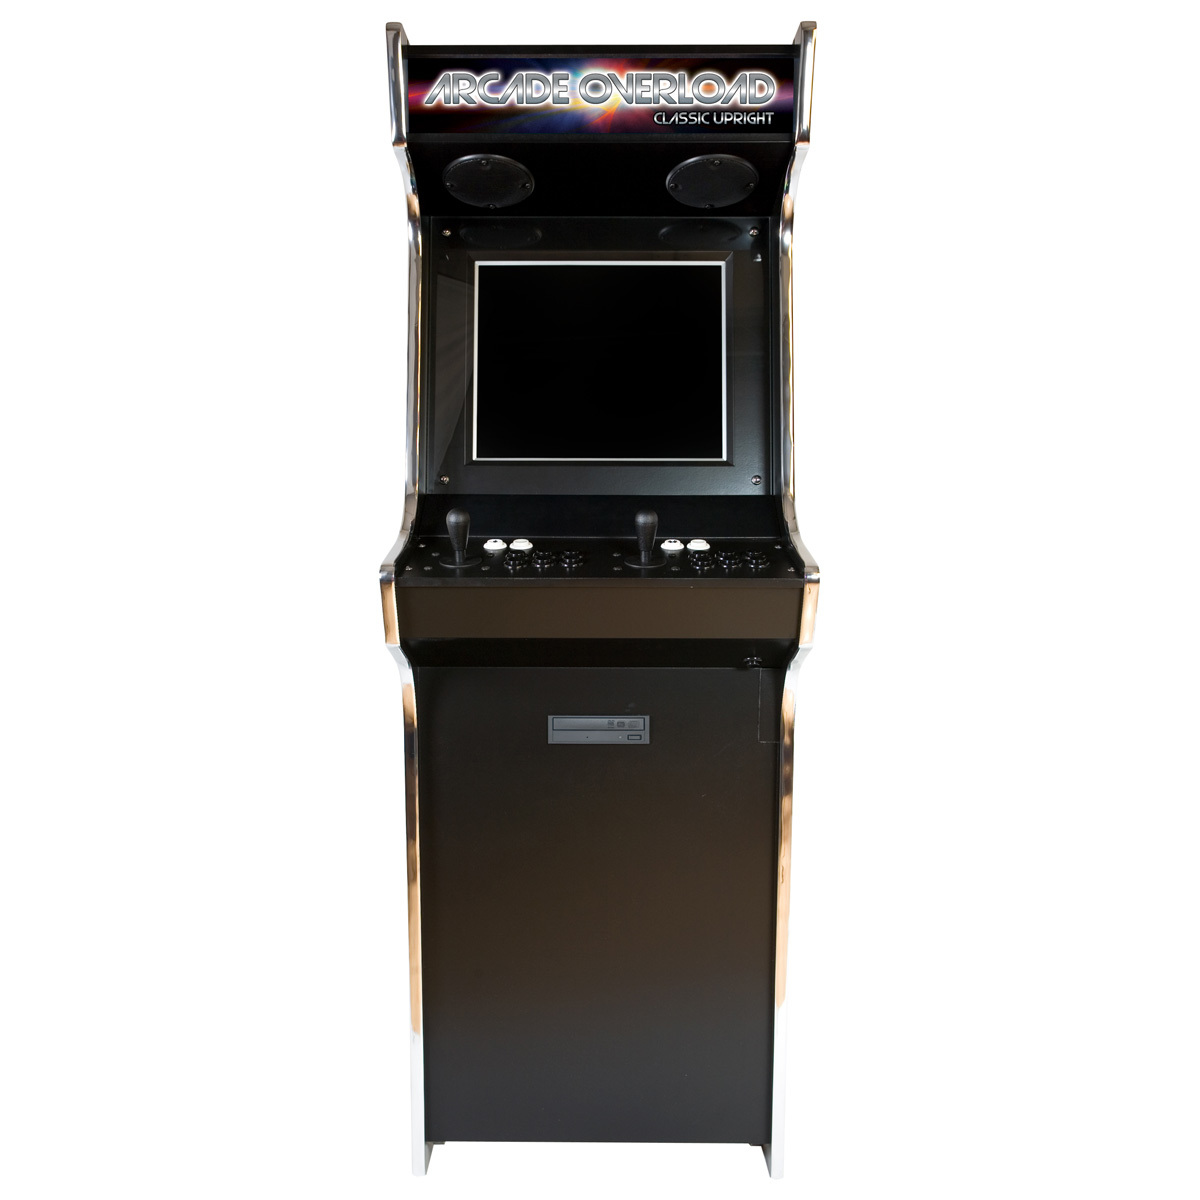 Arcade Overload Classic Upright Arcade Machine - in 2 Editions